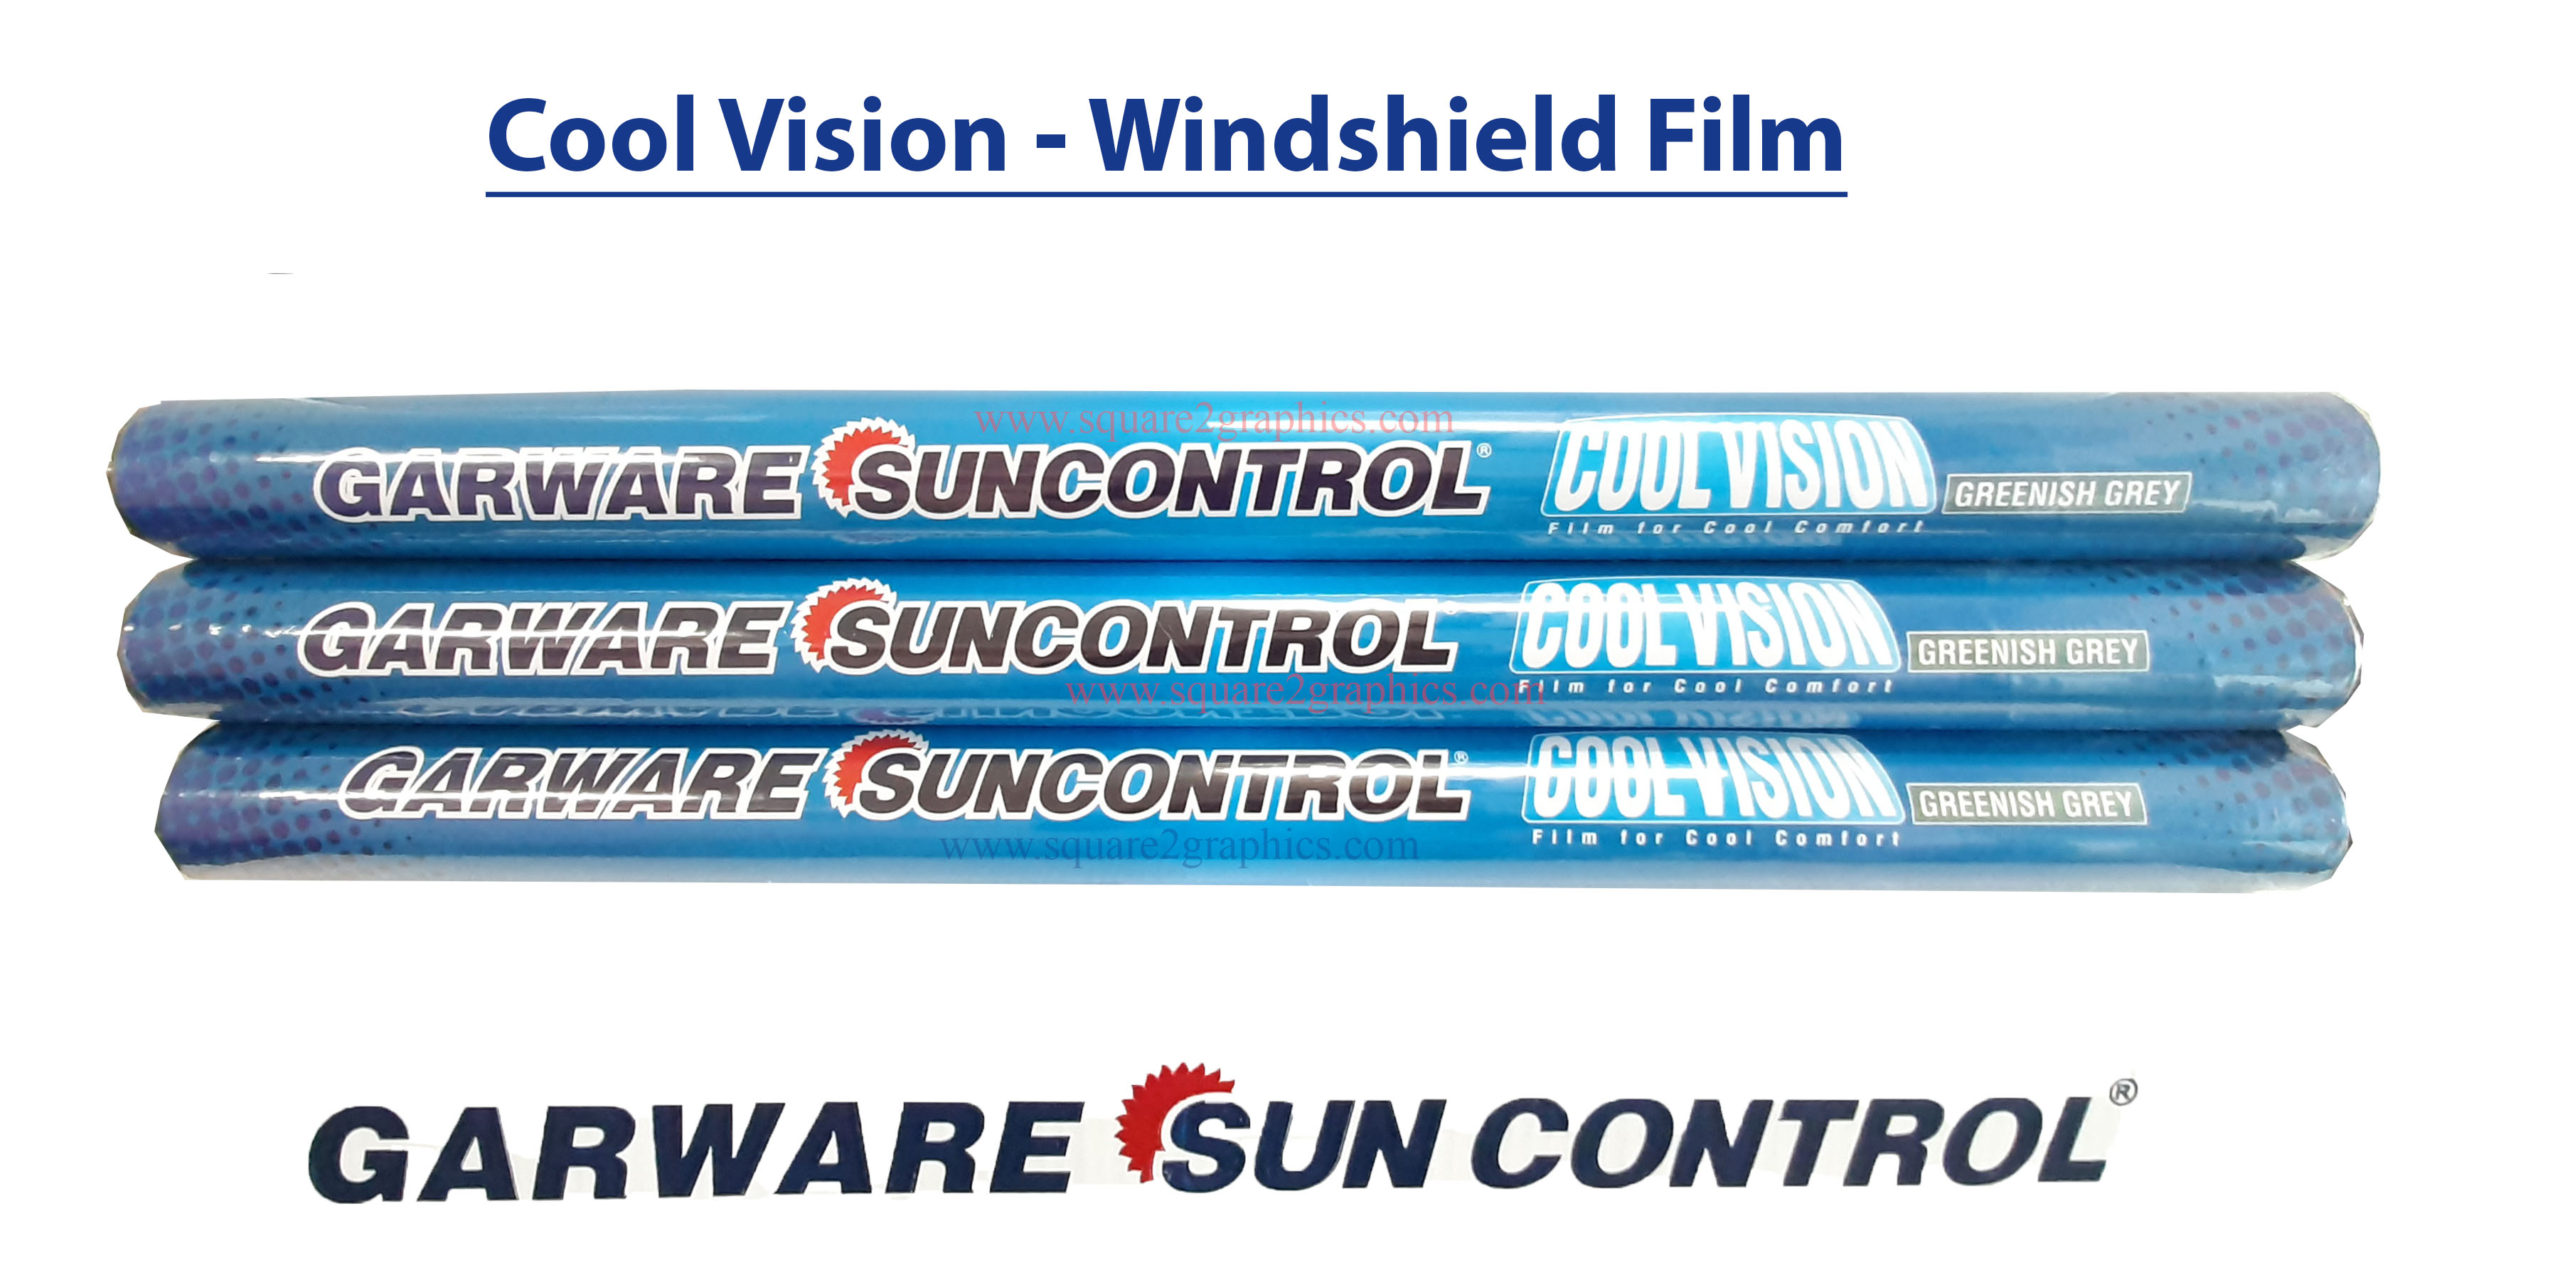 Garware Cool Vision Windshield Film – Square 2 Graphics